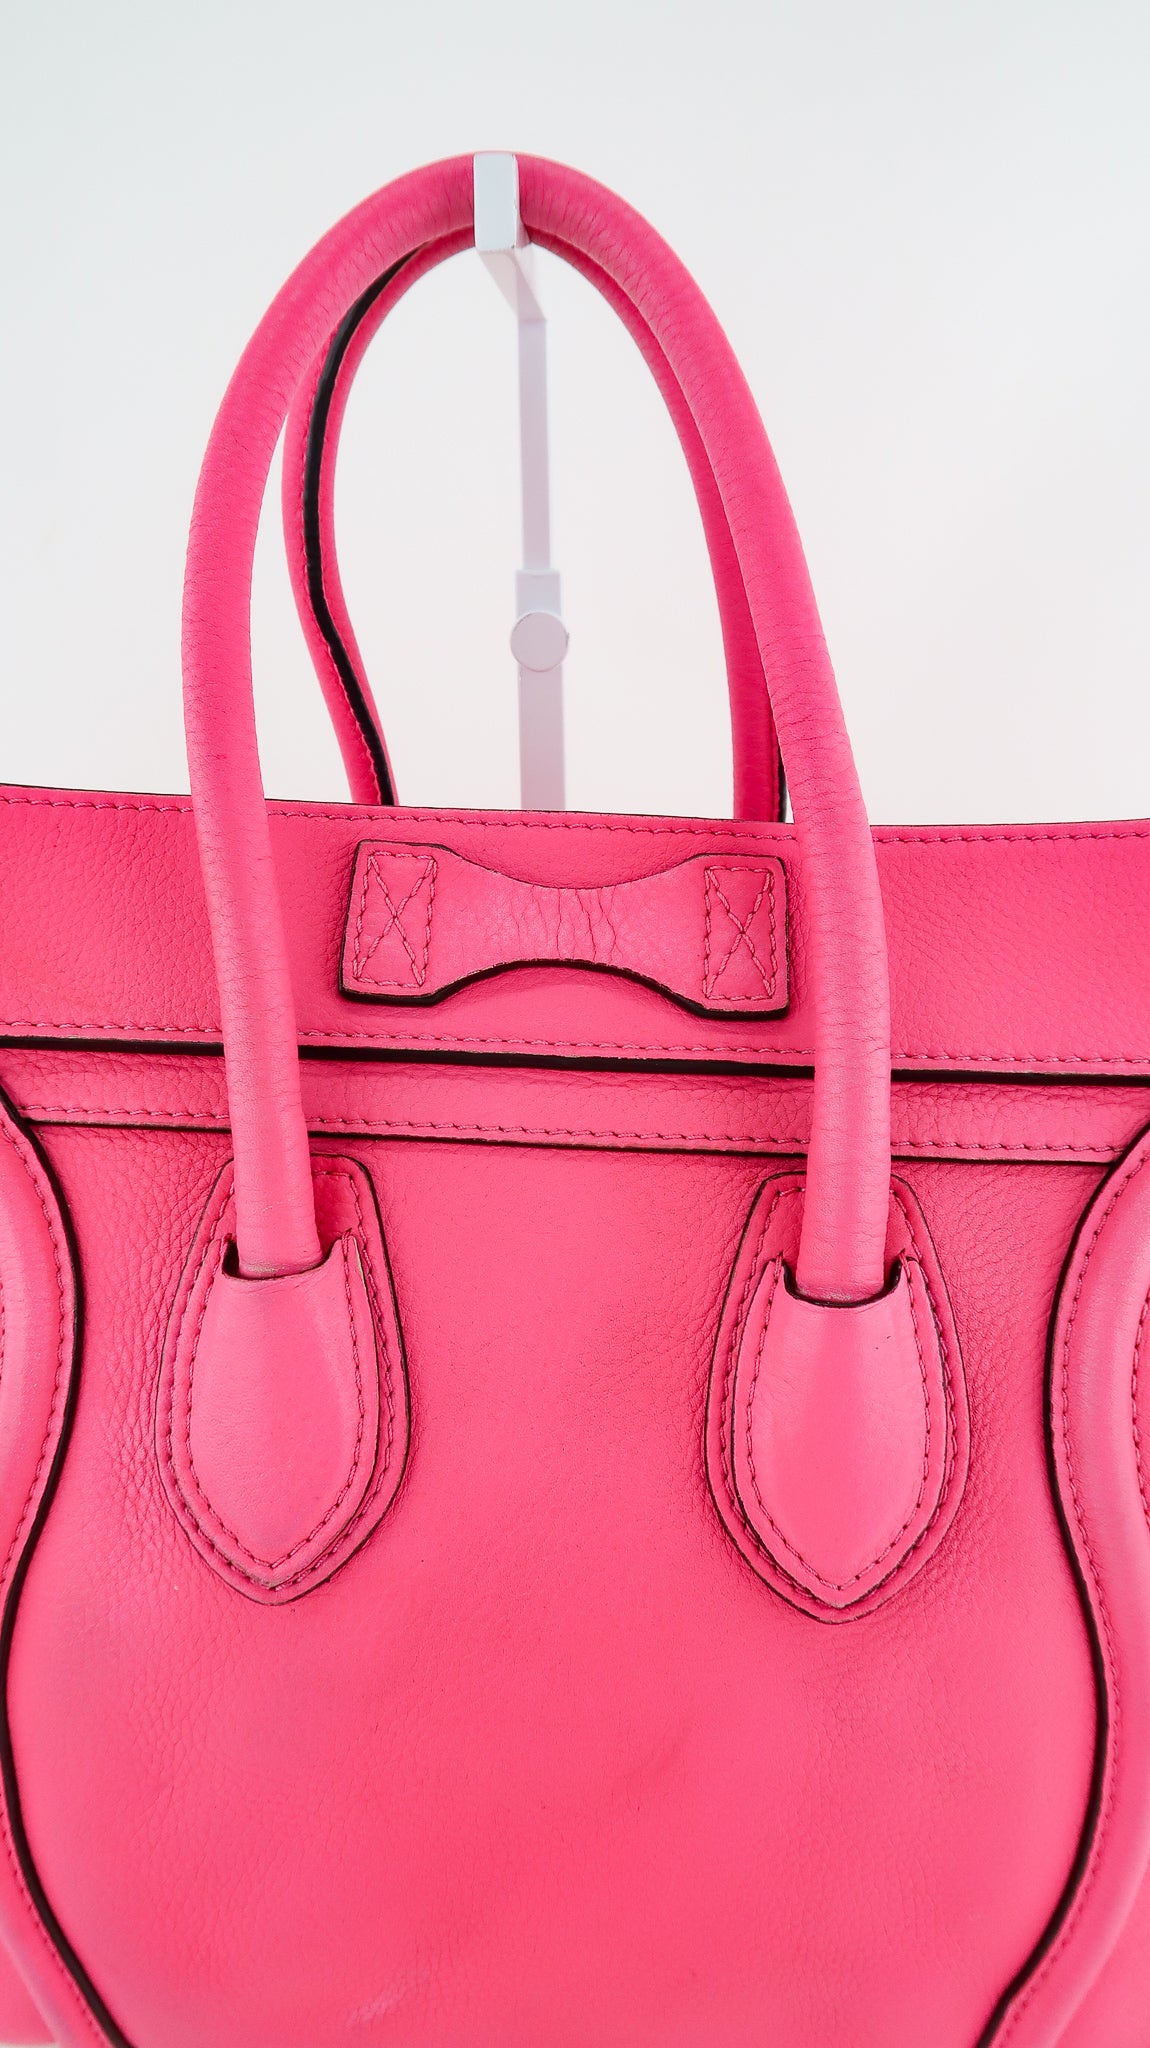 Beautygirl24 #celine #mini #luggage #pink #celineminiluggagepink